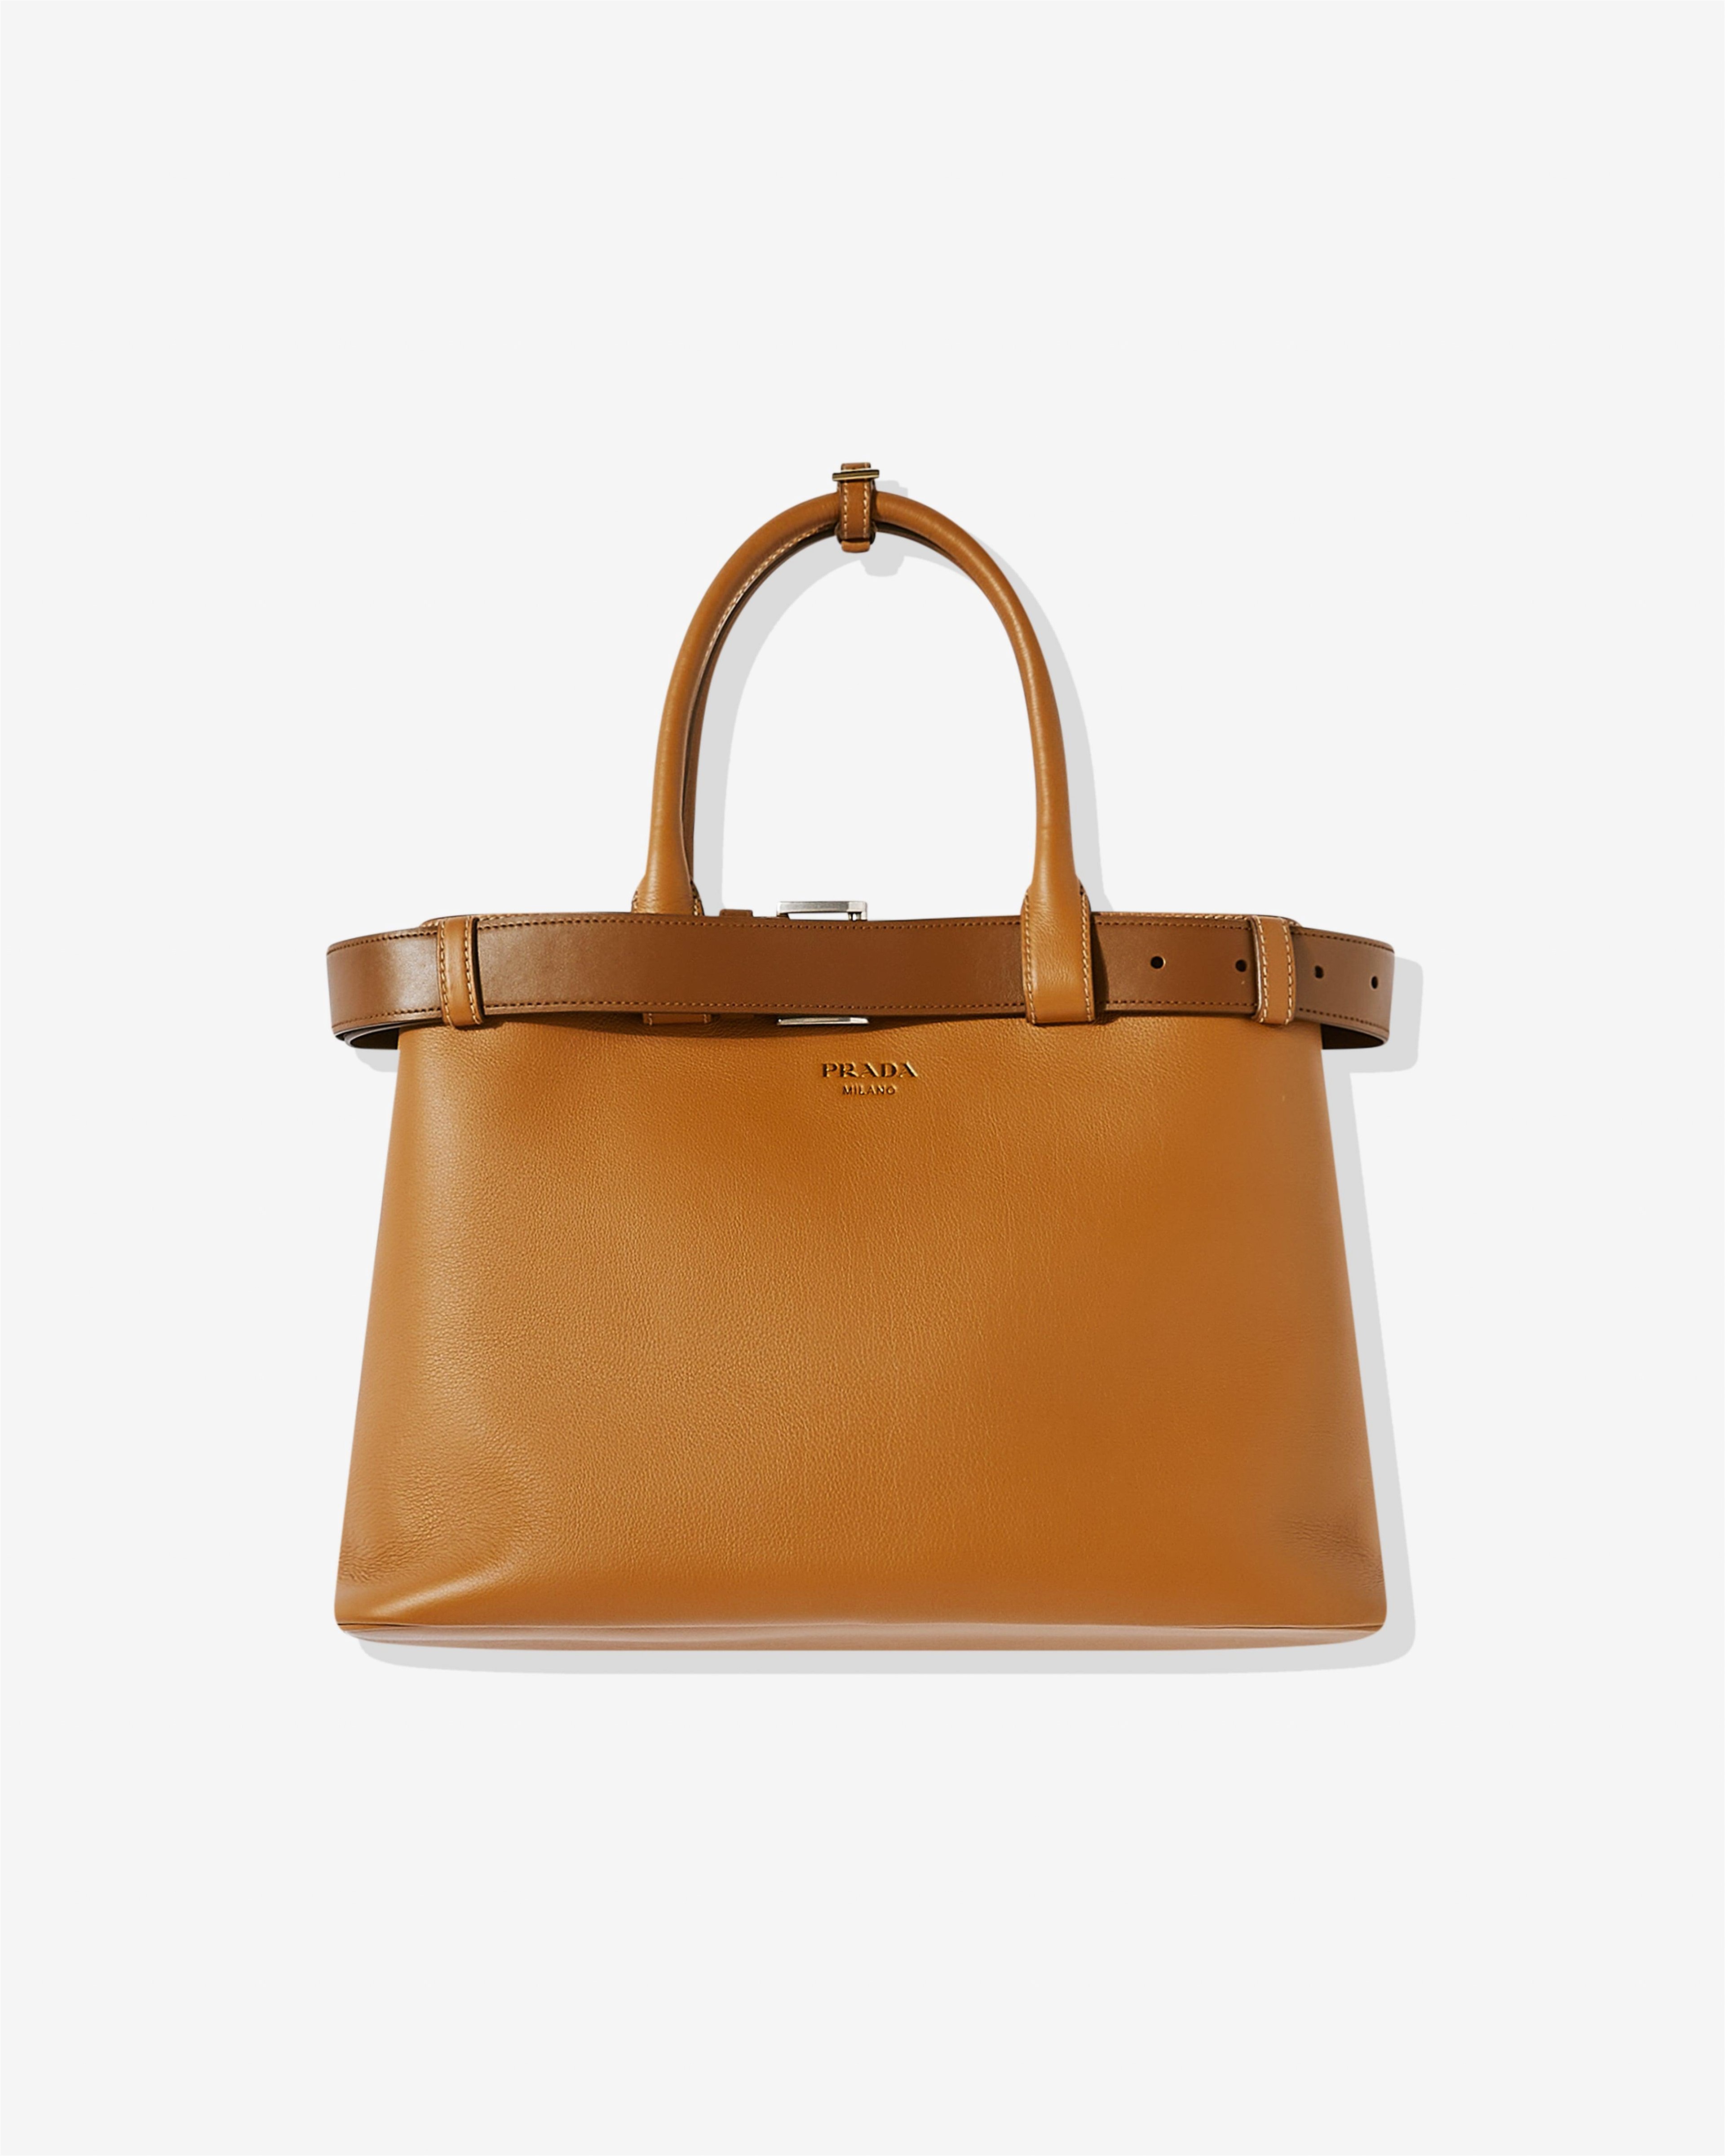 Prada - Buckle Large Leather Handbag With Belt - (Caramel) by PRADA